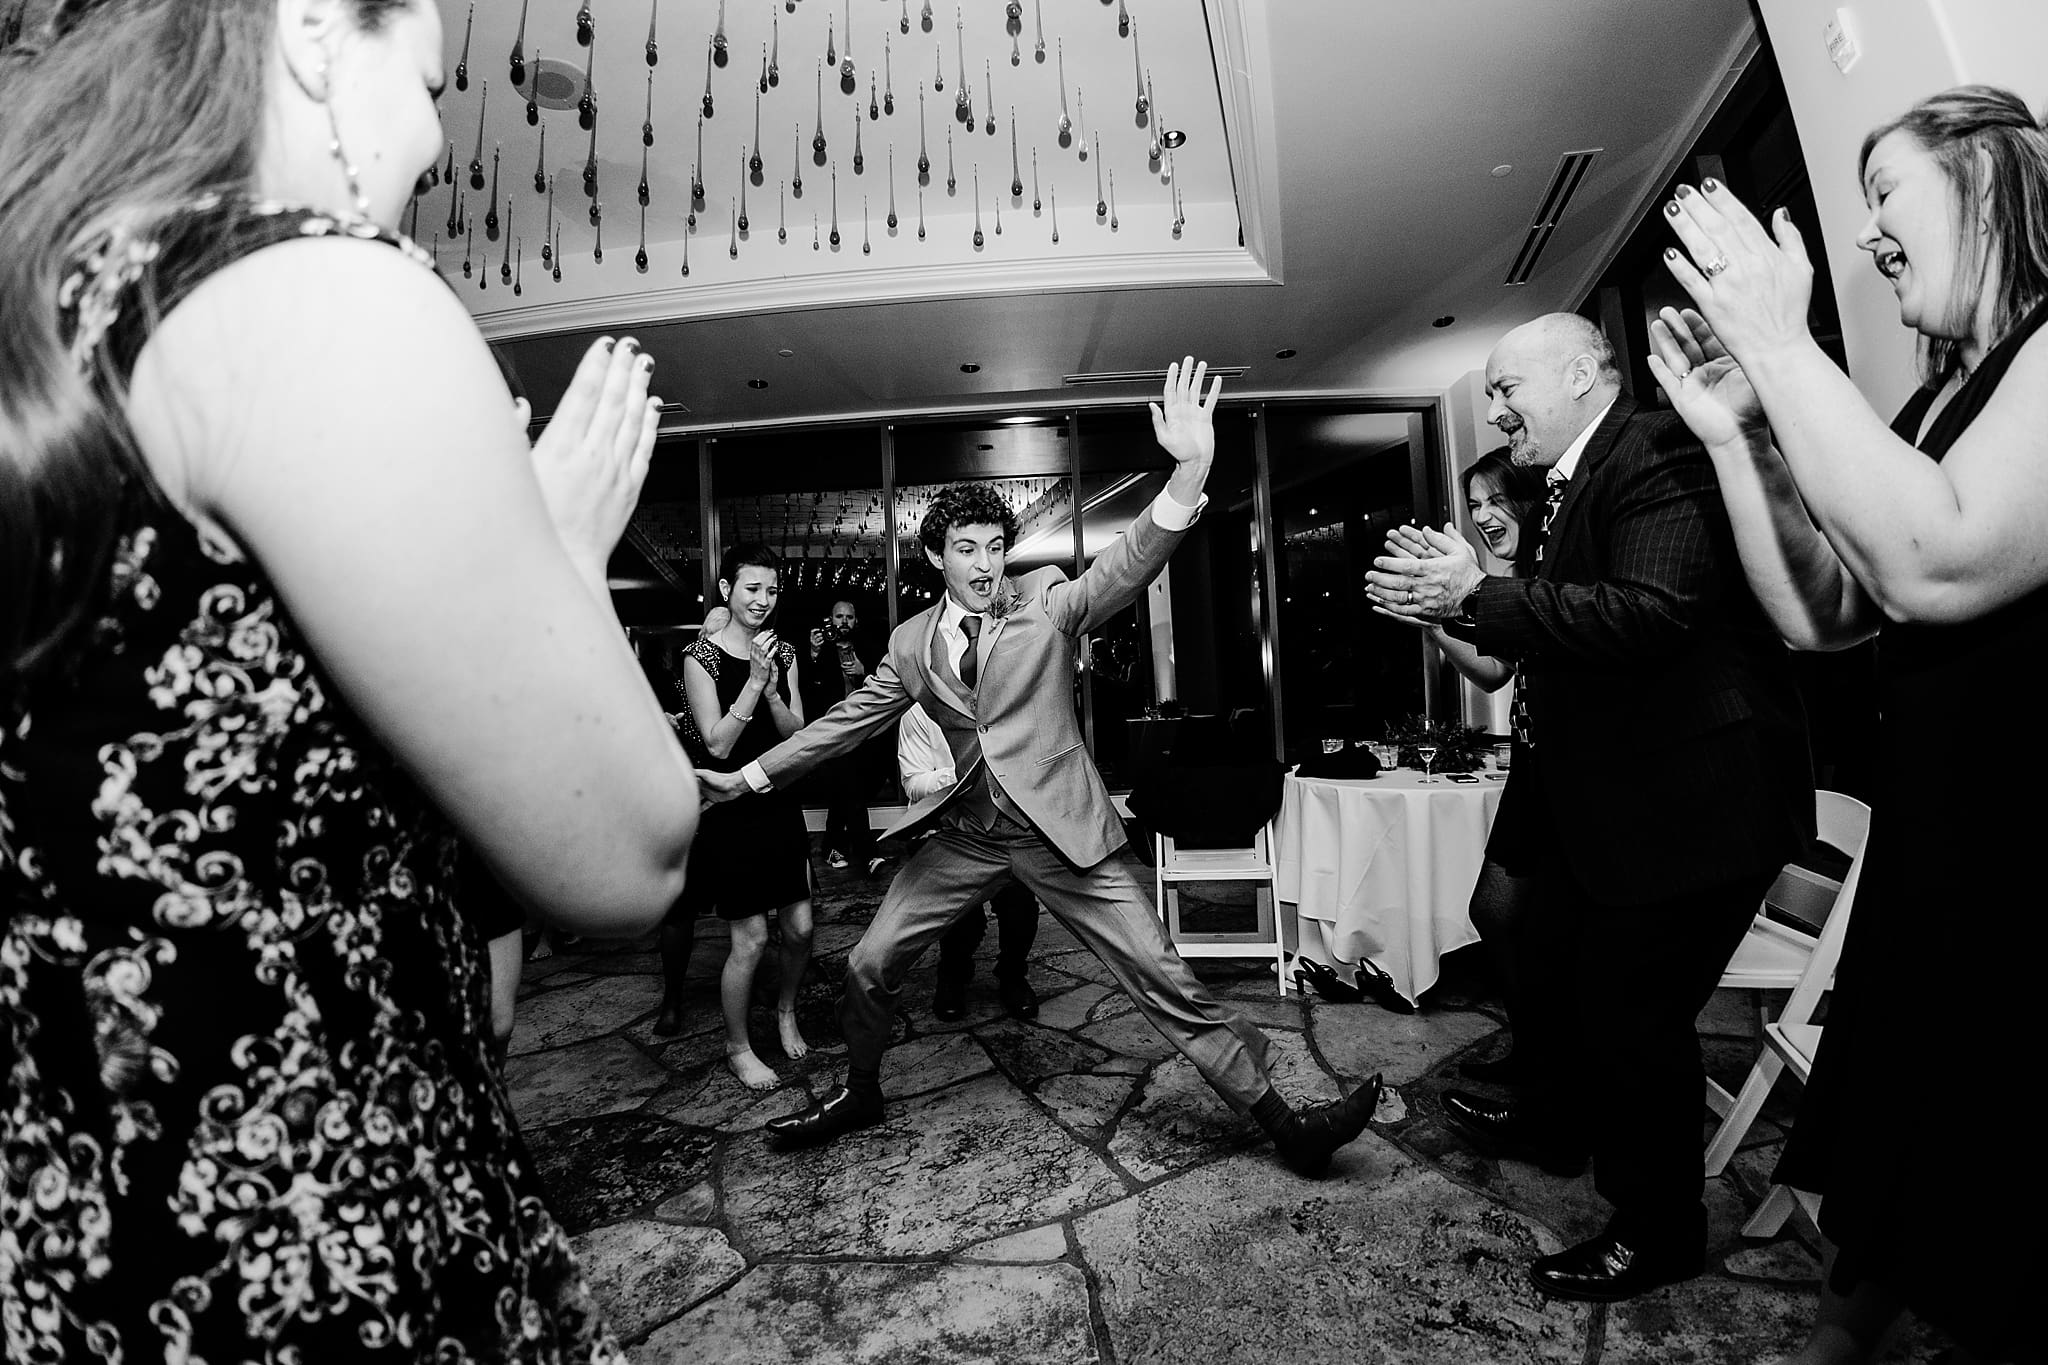 wedding reception dancing photos at peaks resort and spa in telluride